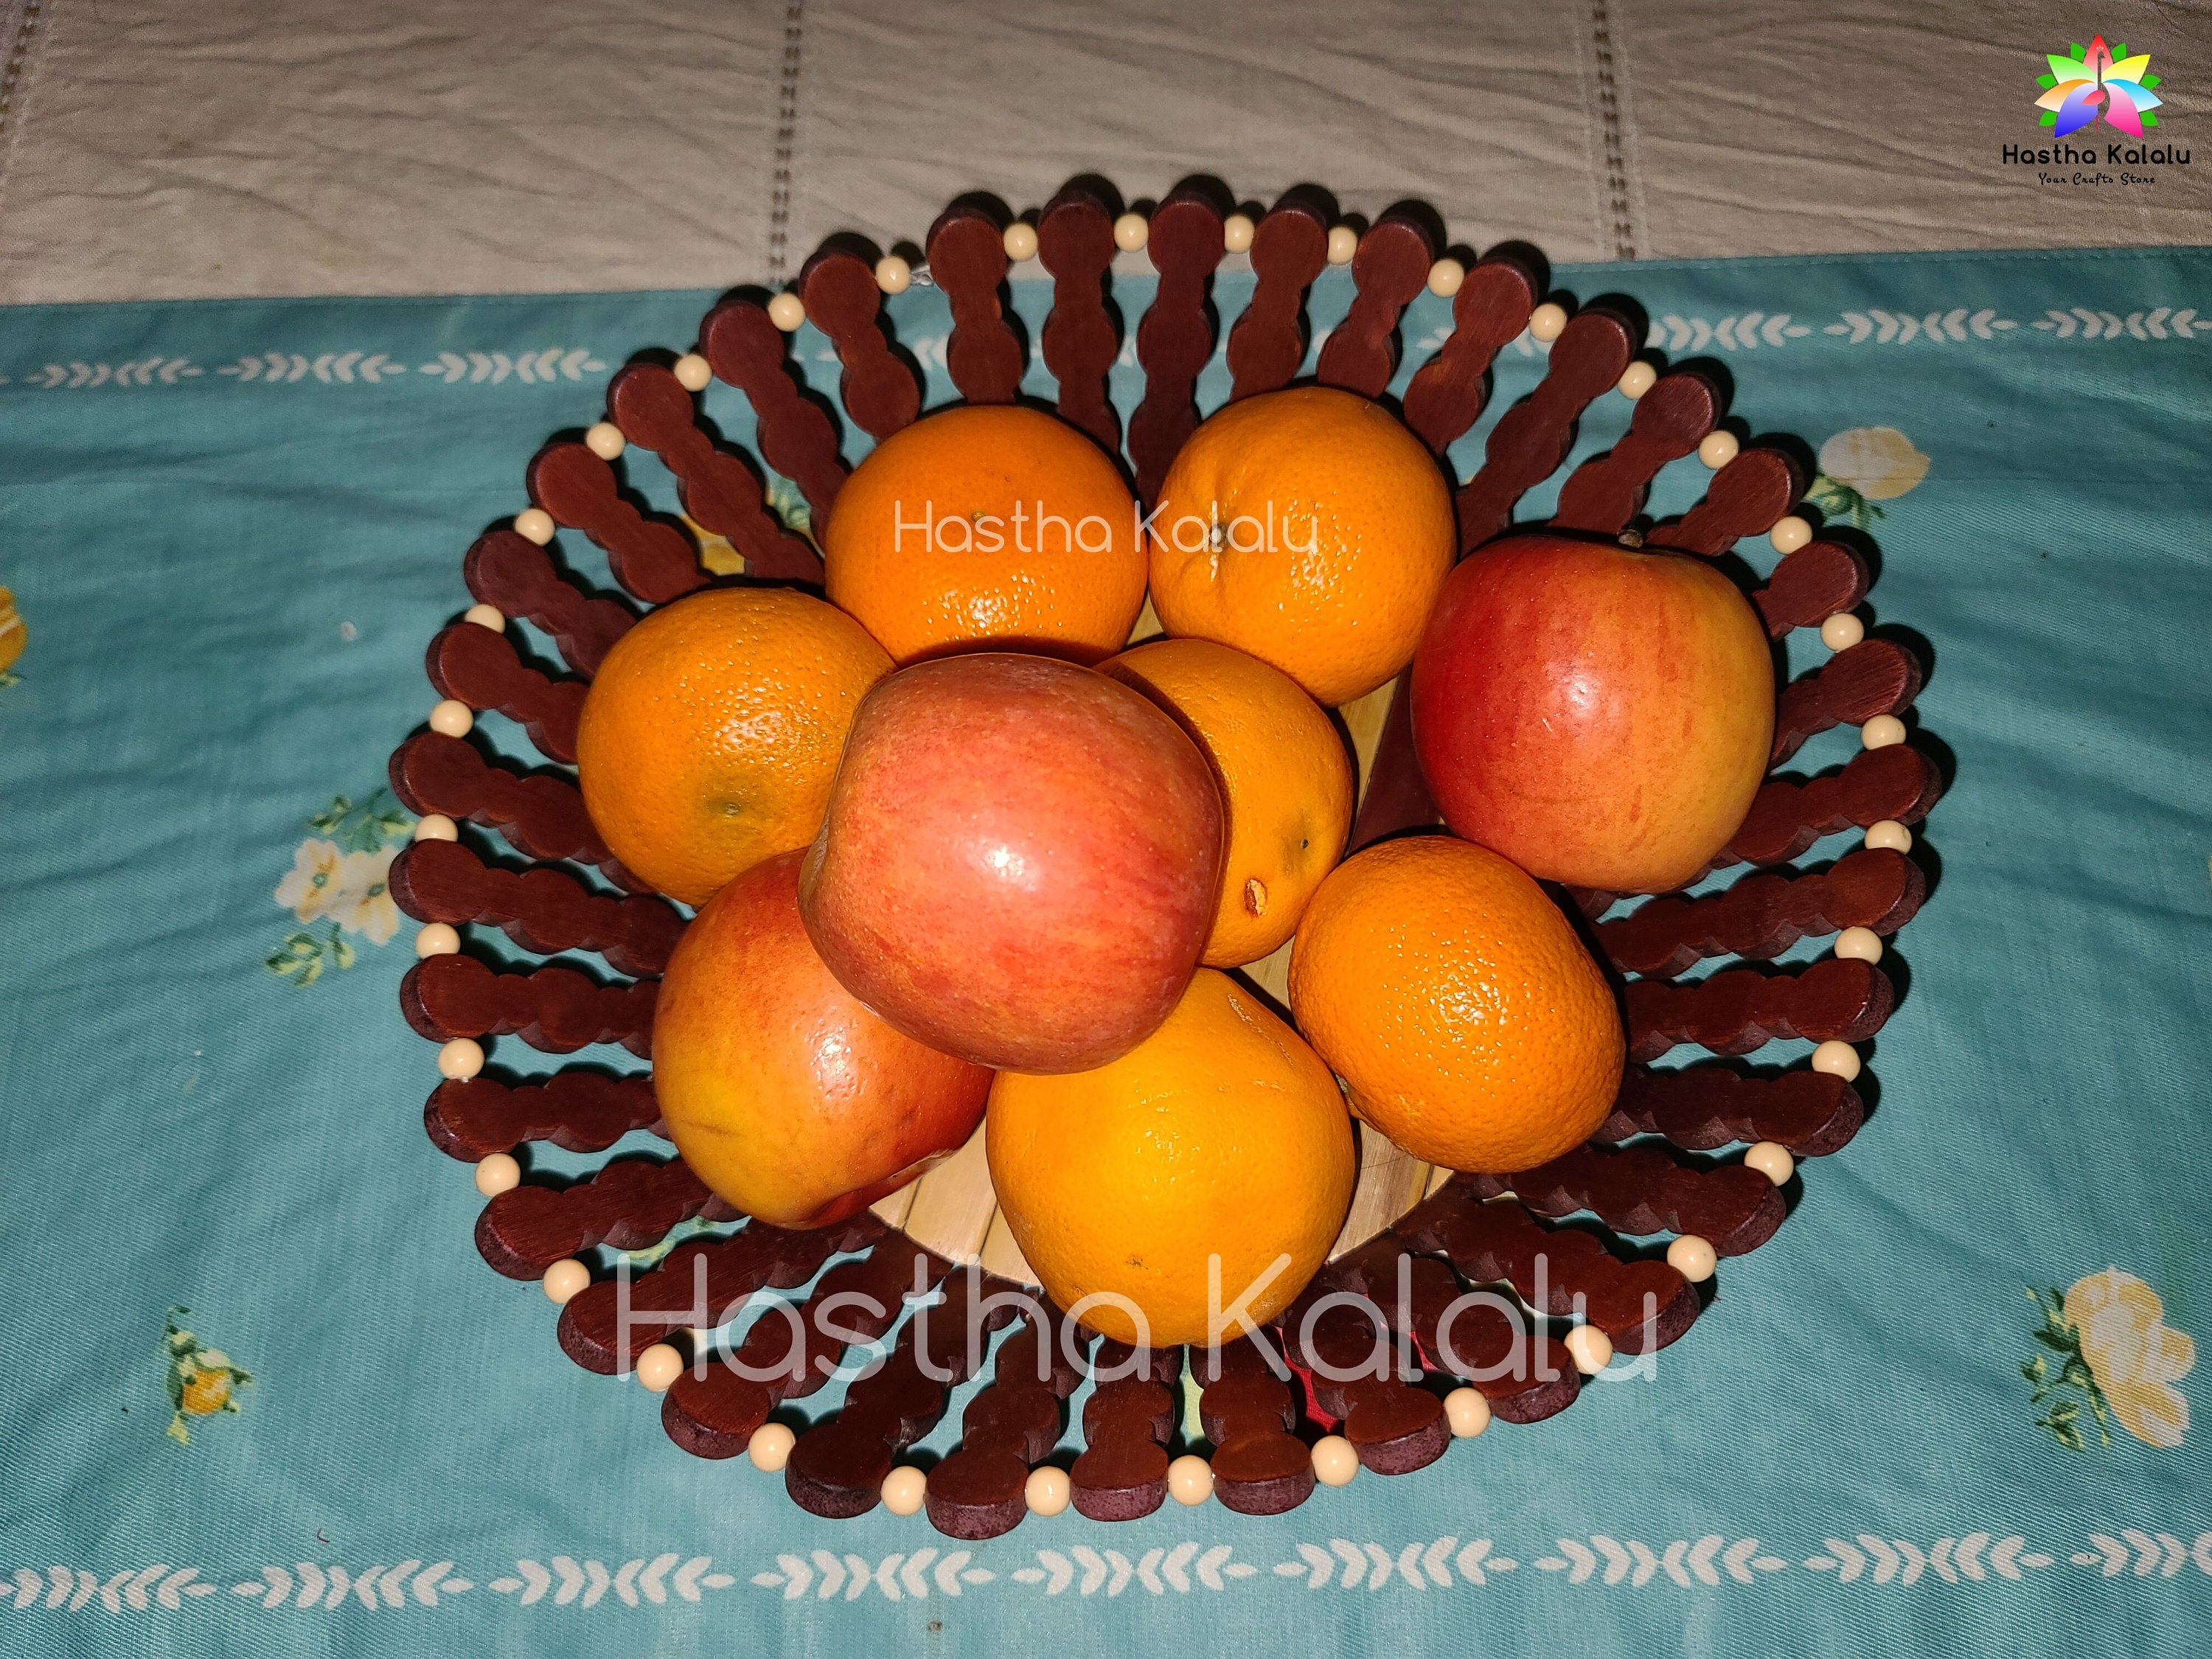 Handmade Wooden 15 Inch Long Fruit Bowl/ Fruit Basket